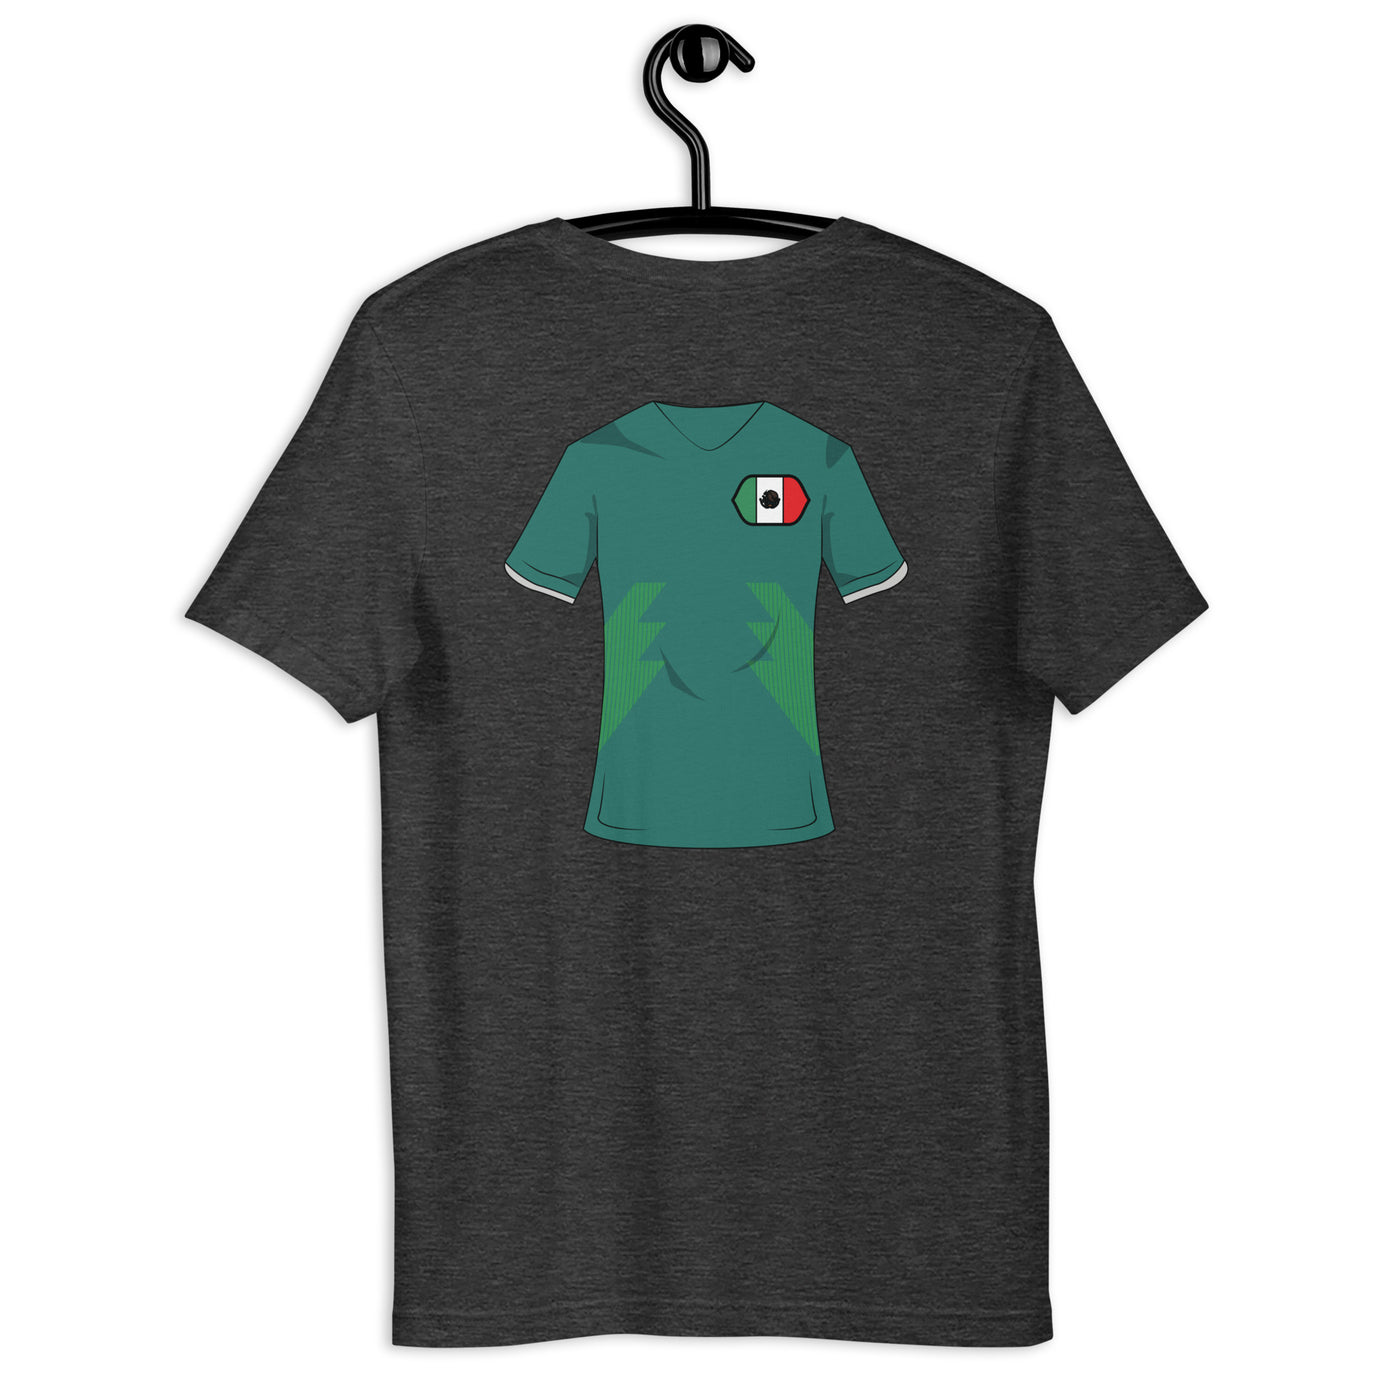 Mexico Futbol POR VIDA Jersey t-shirt